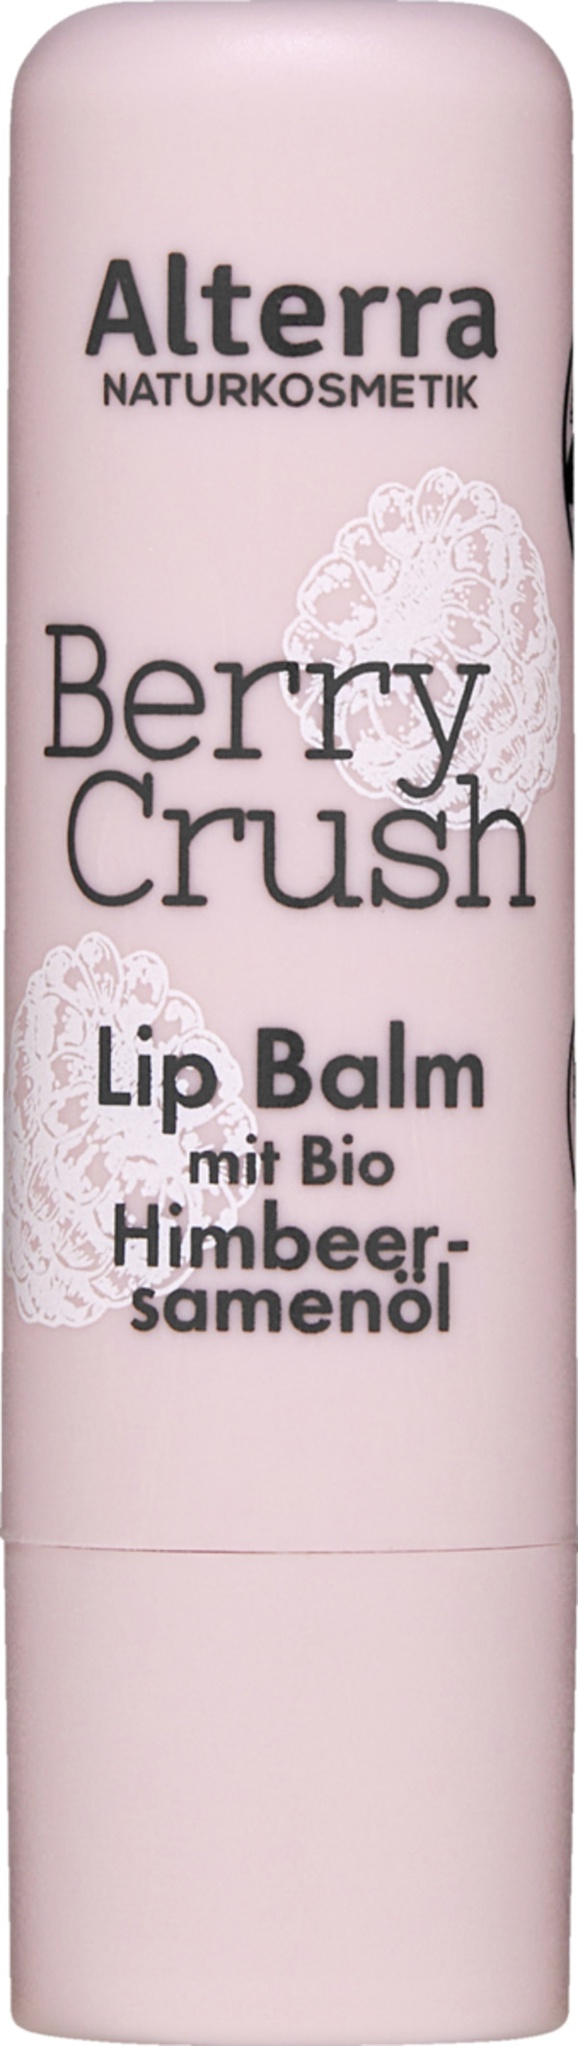 Alterra Berry Crush Lip Balm